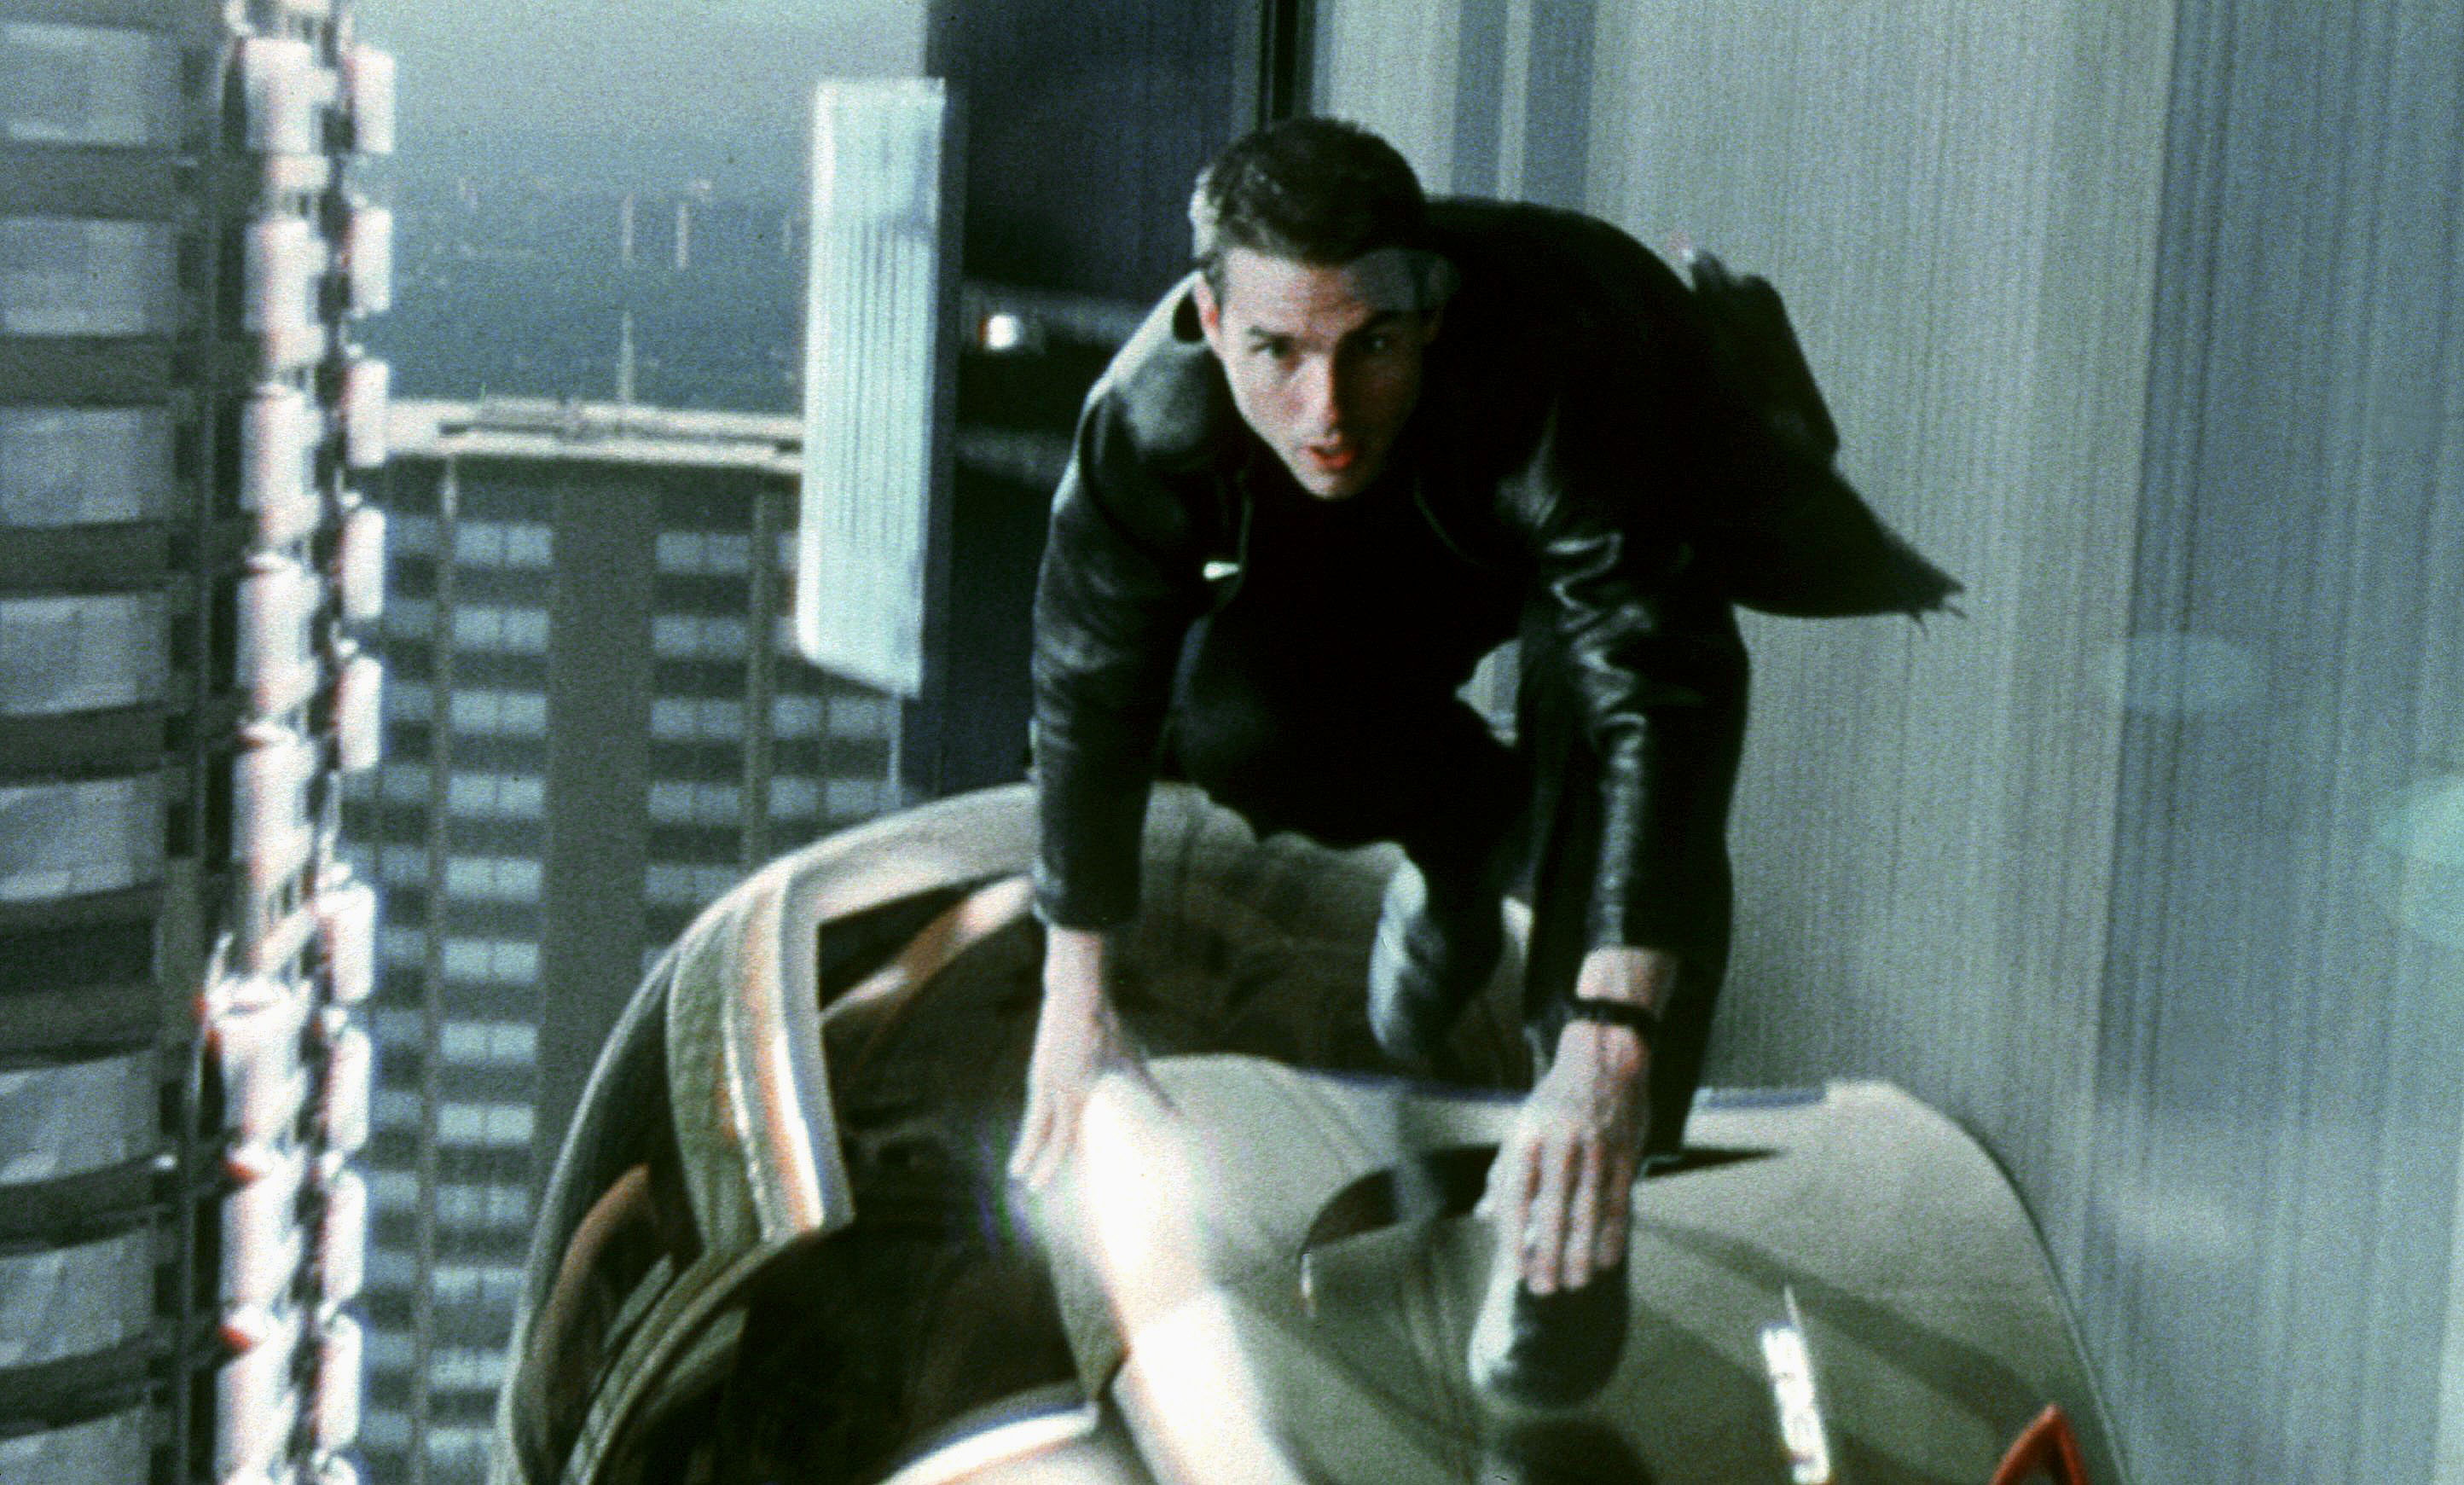 Tom Cruise as John Anderton, kneeling on a ledge in Minority Report